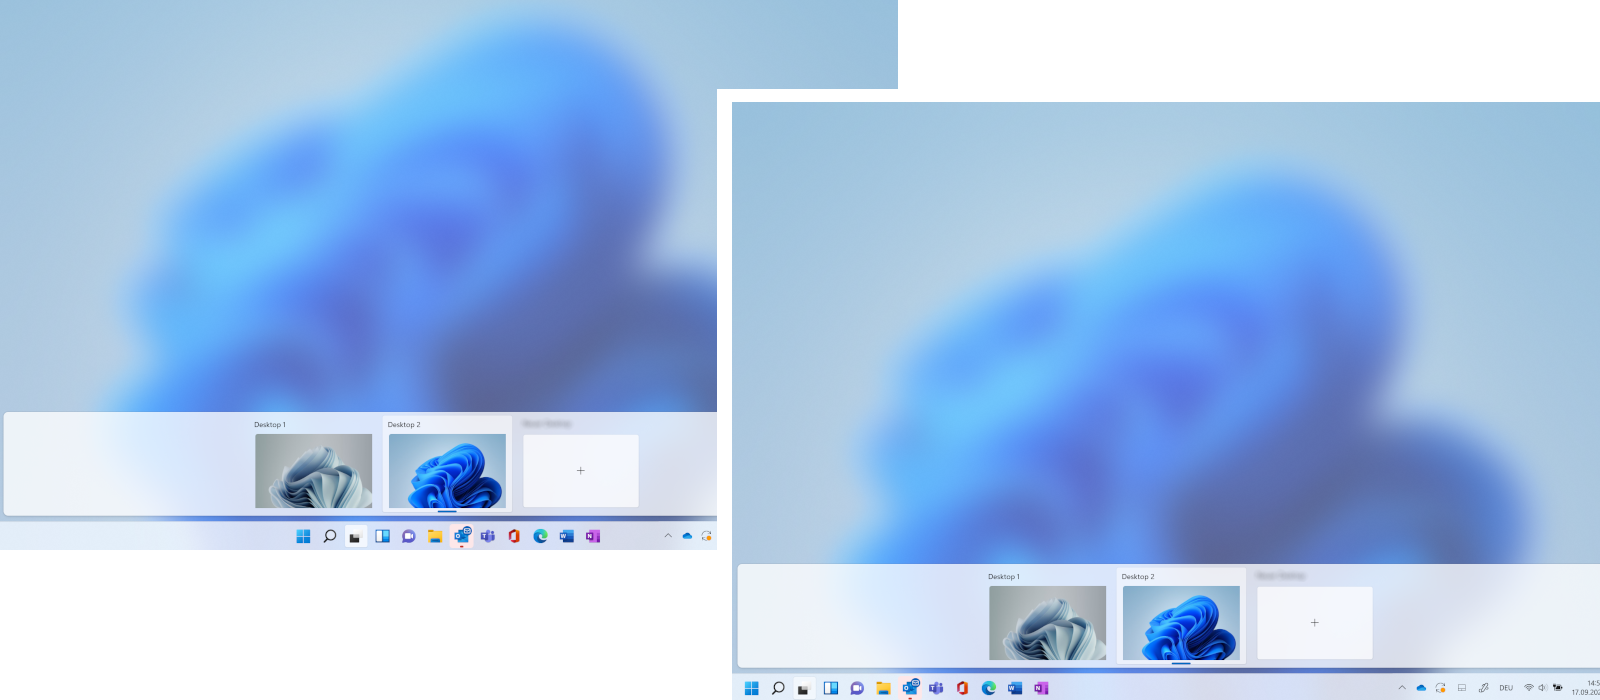 Two screenshots show different desktop and taskbar variants in Windows 11